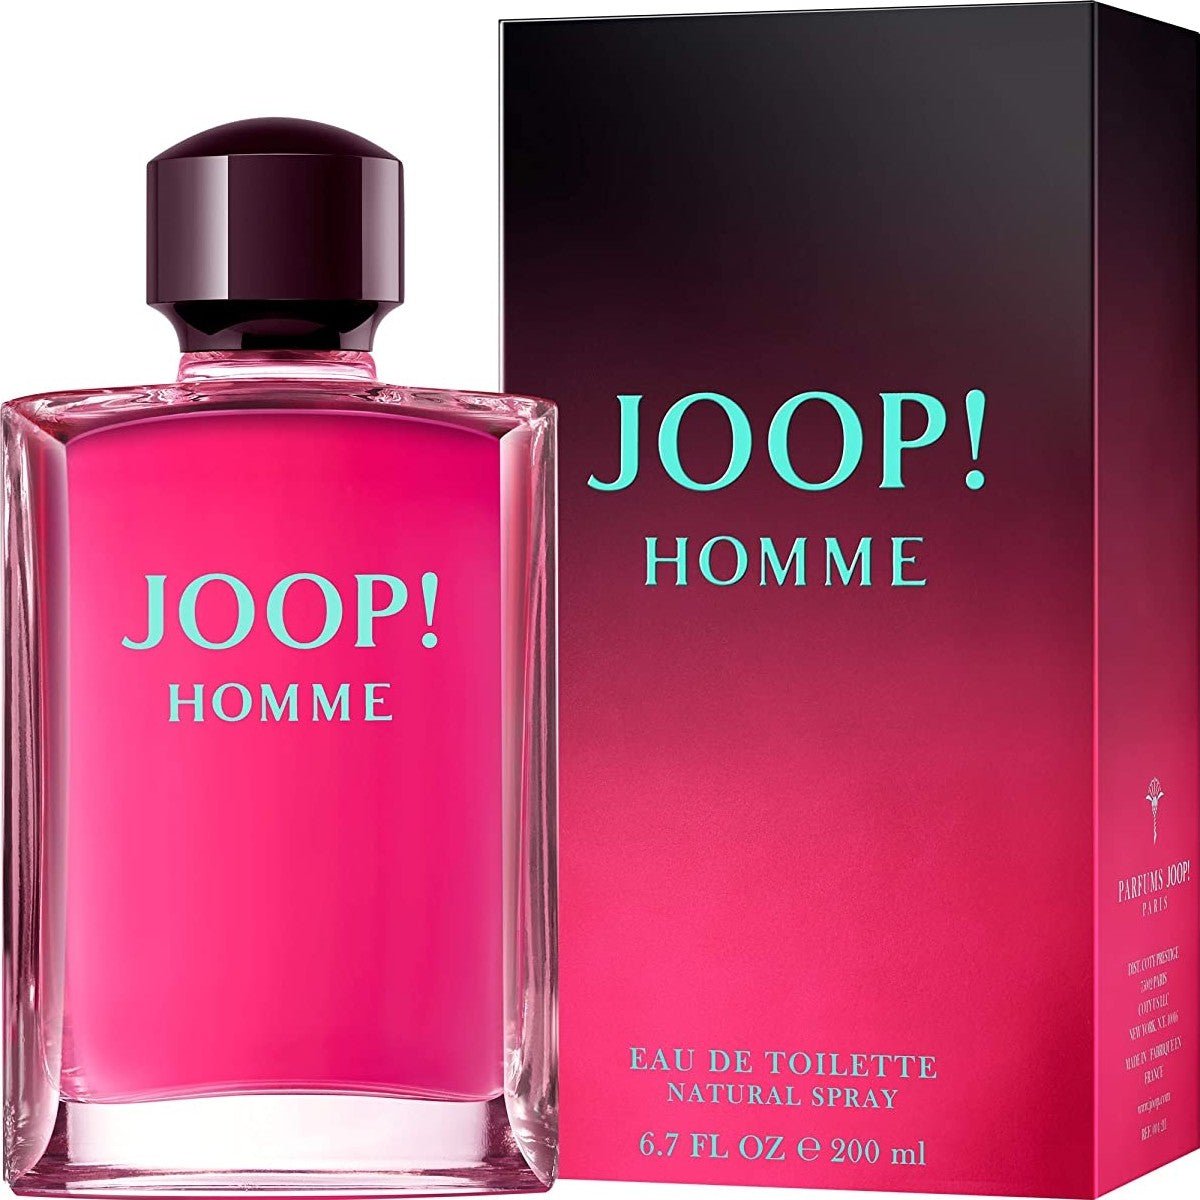 Joop! Homme EDT | My Perfume Shop Australia